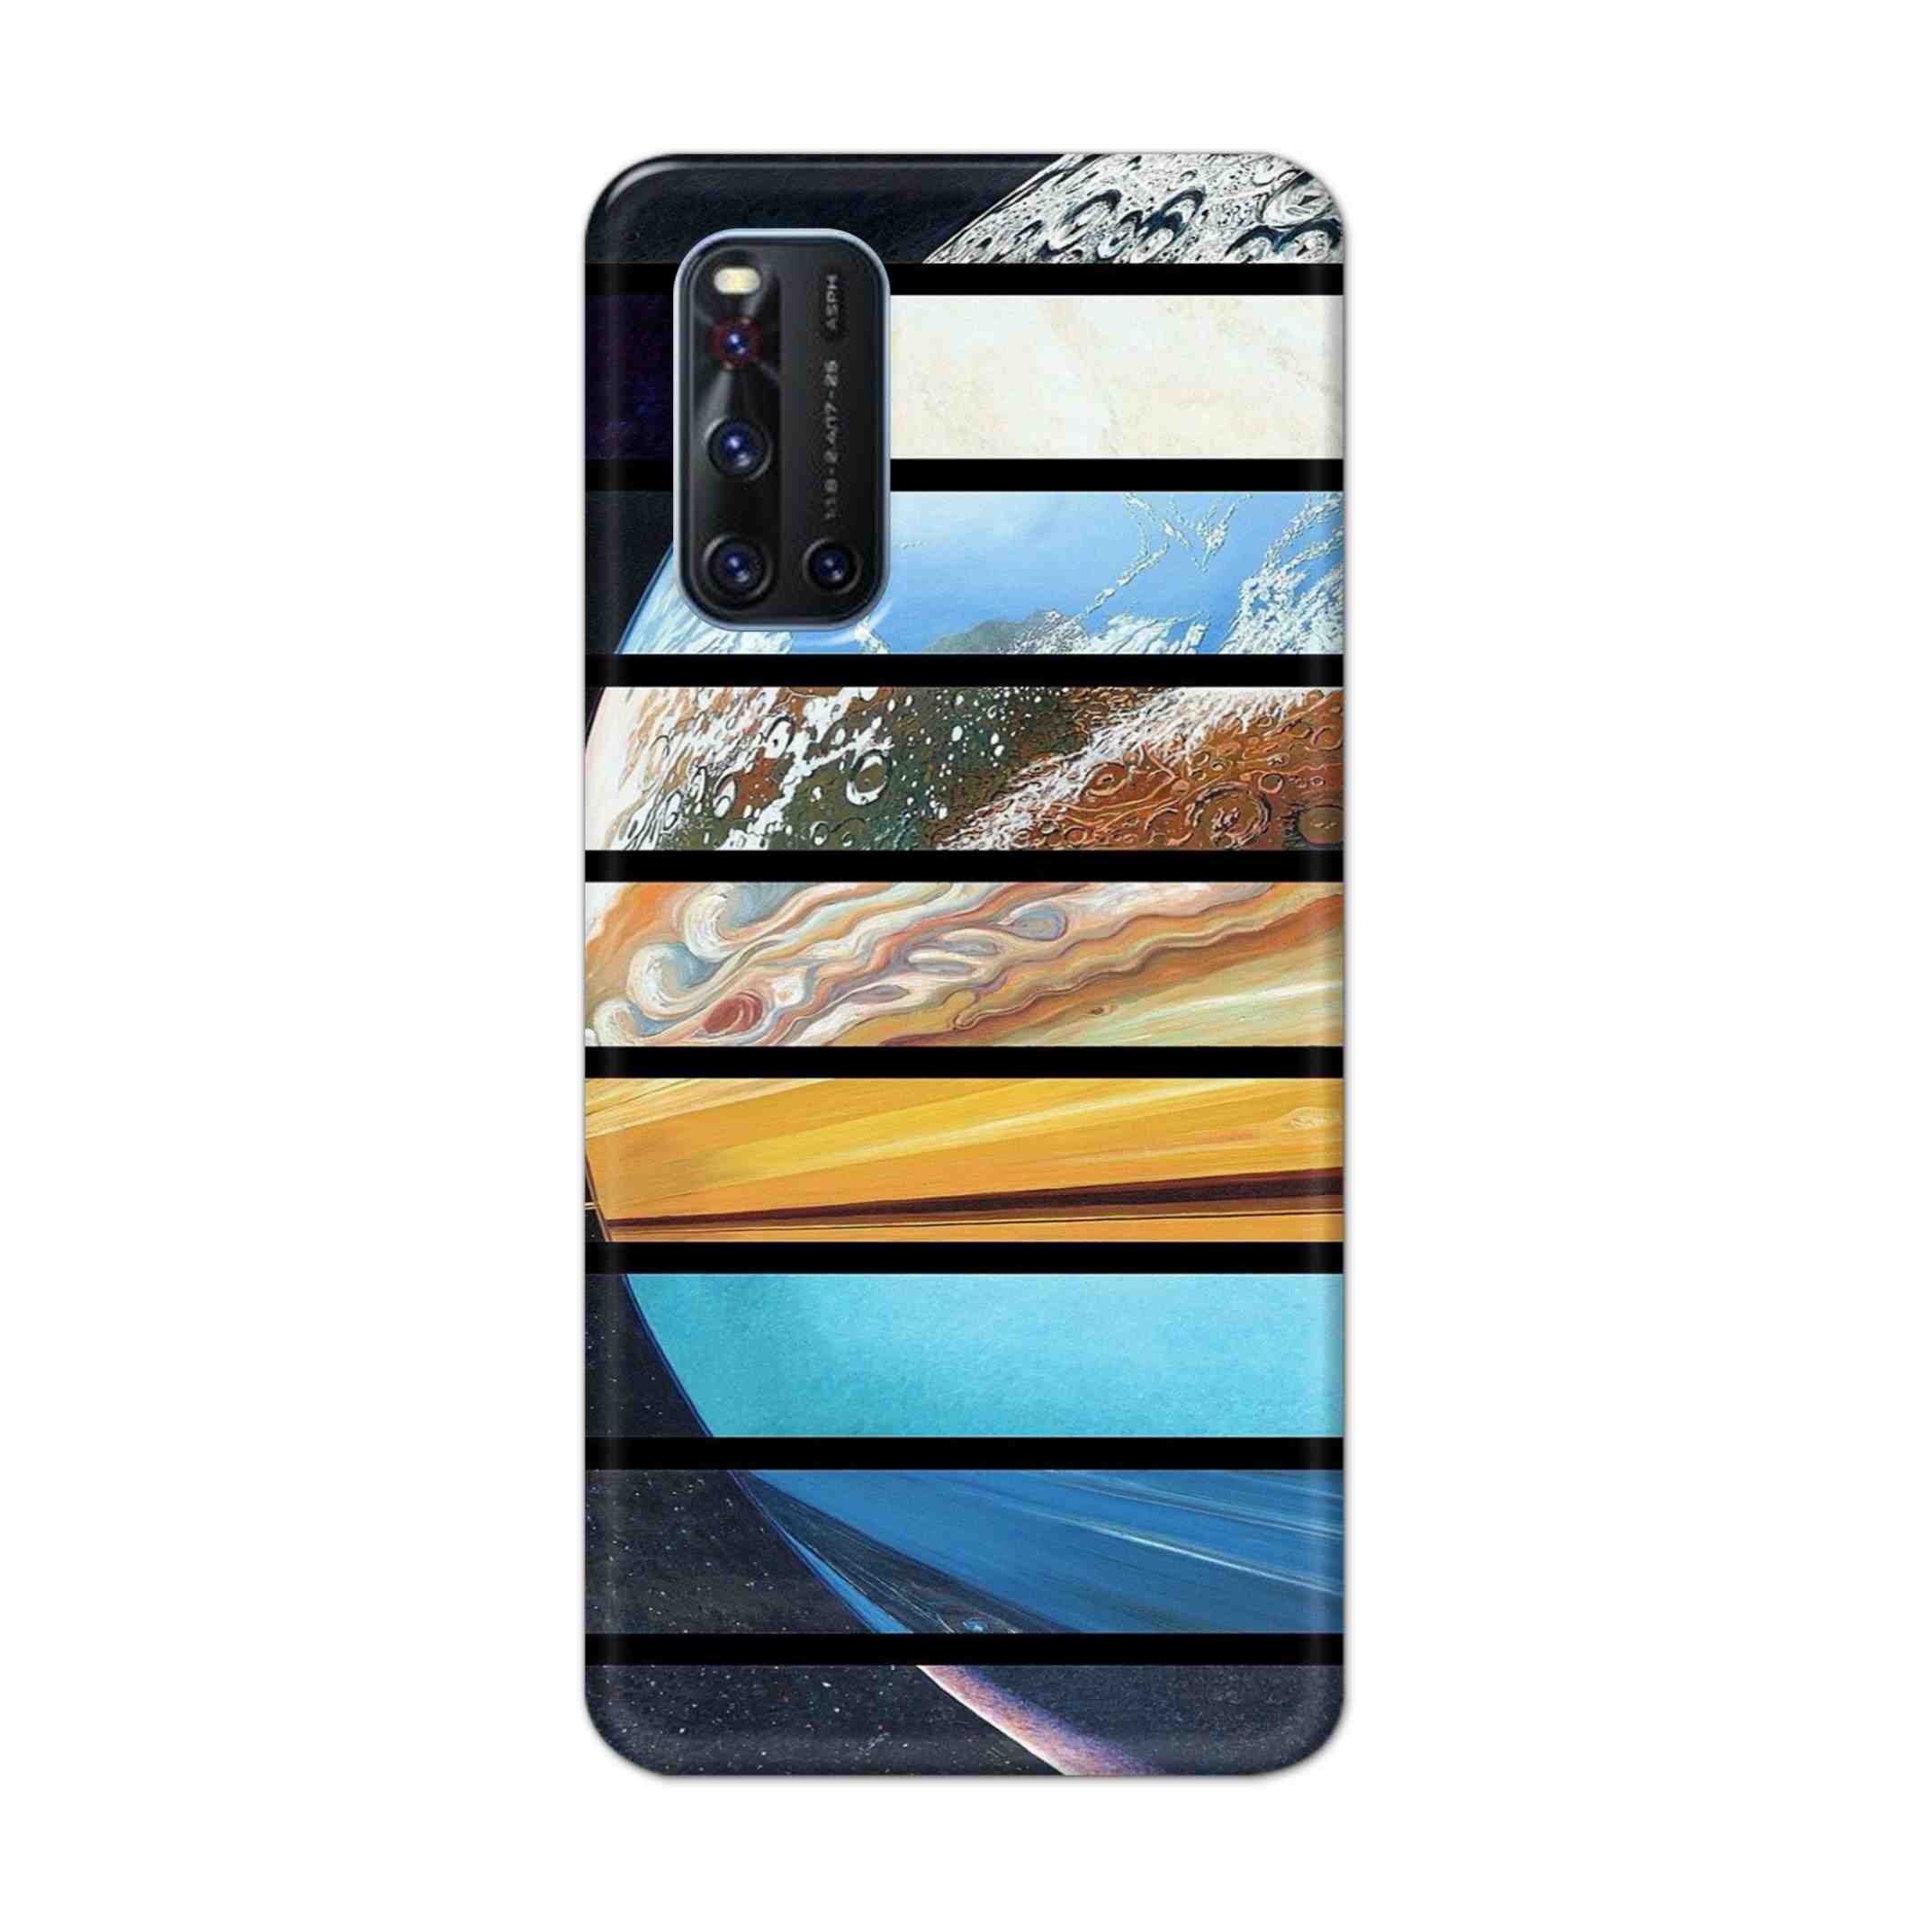 Buy Colourful Earth Hard Back Mobile Phone Case Cover For VivoV19 Online